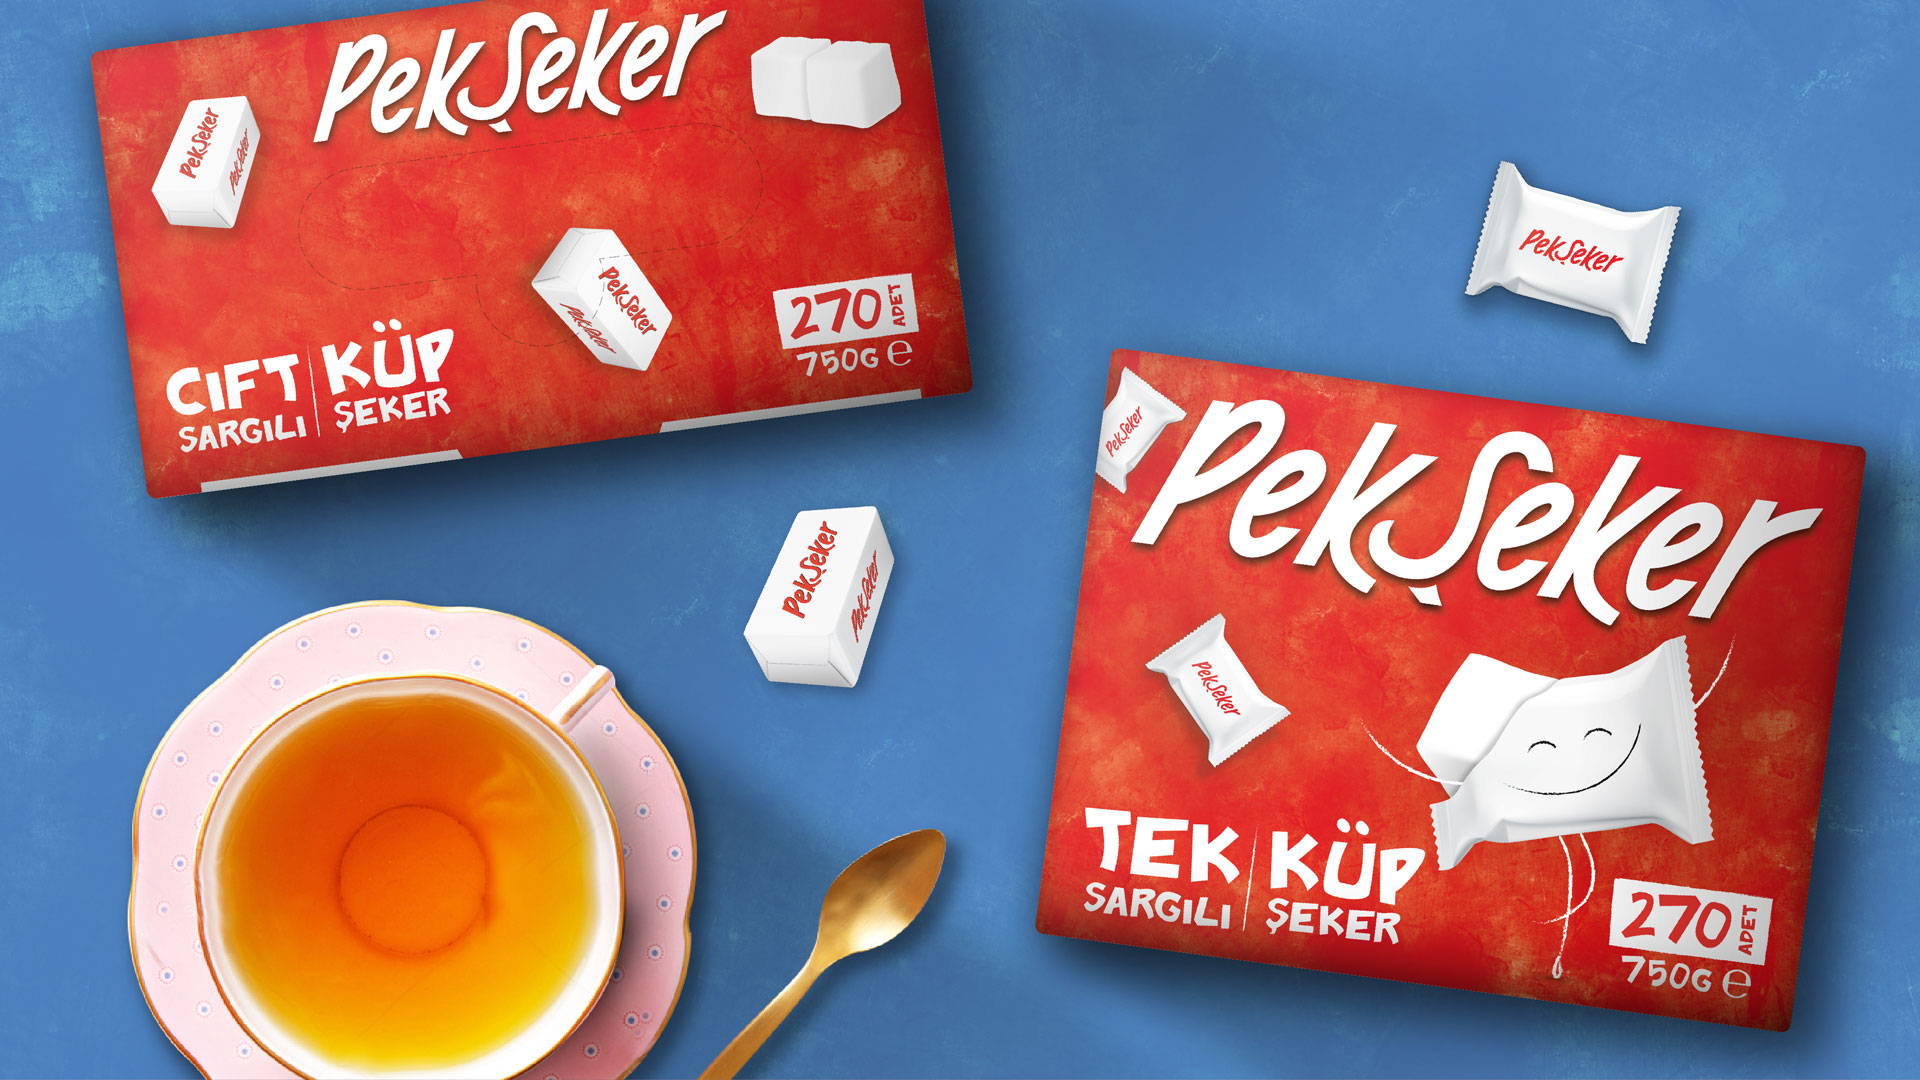 Pekseker Sugar Packaging Design